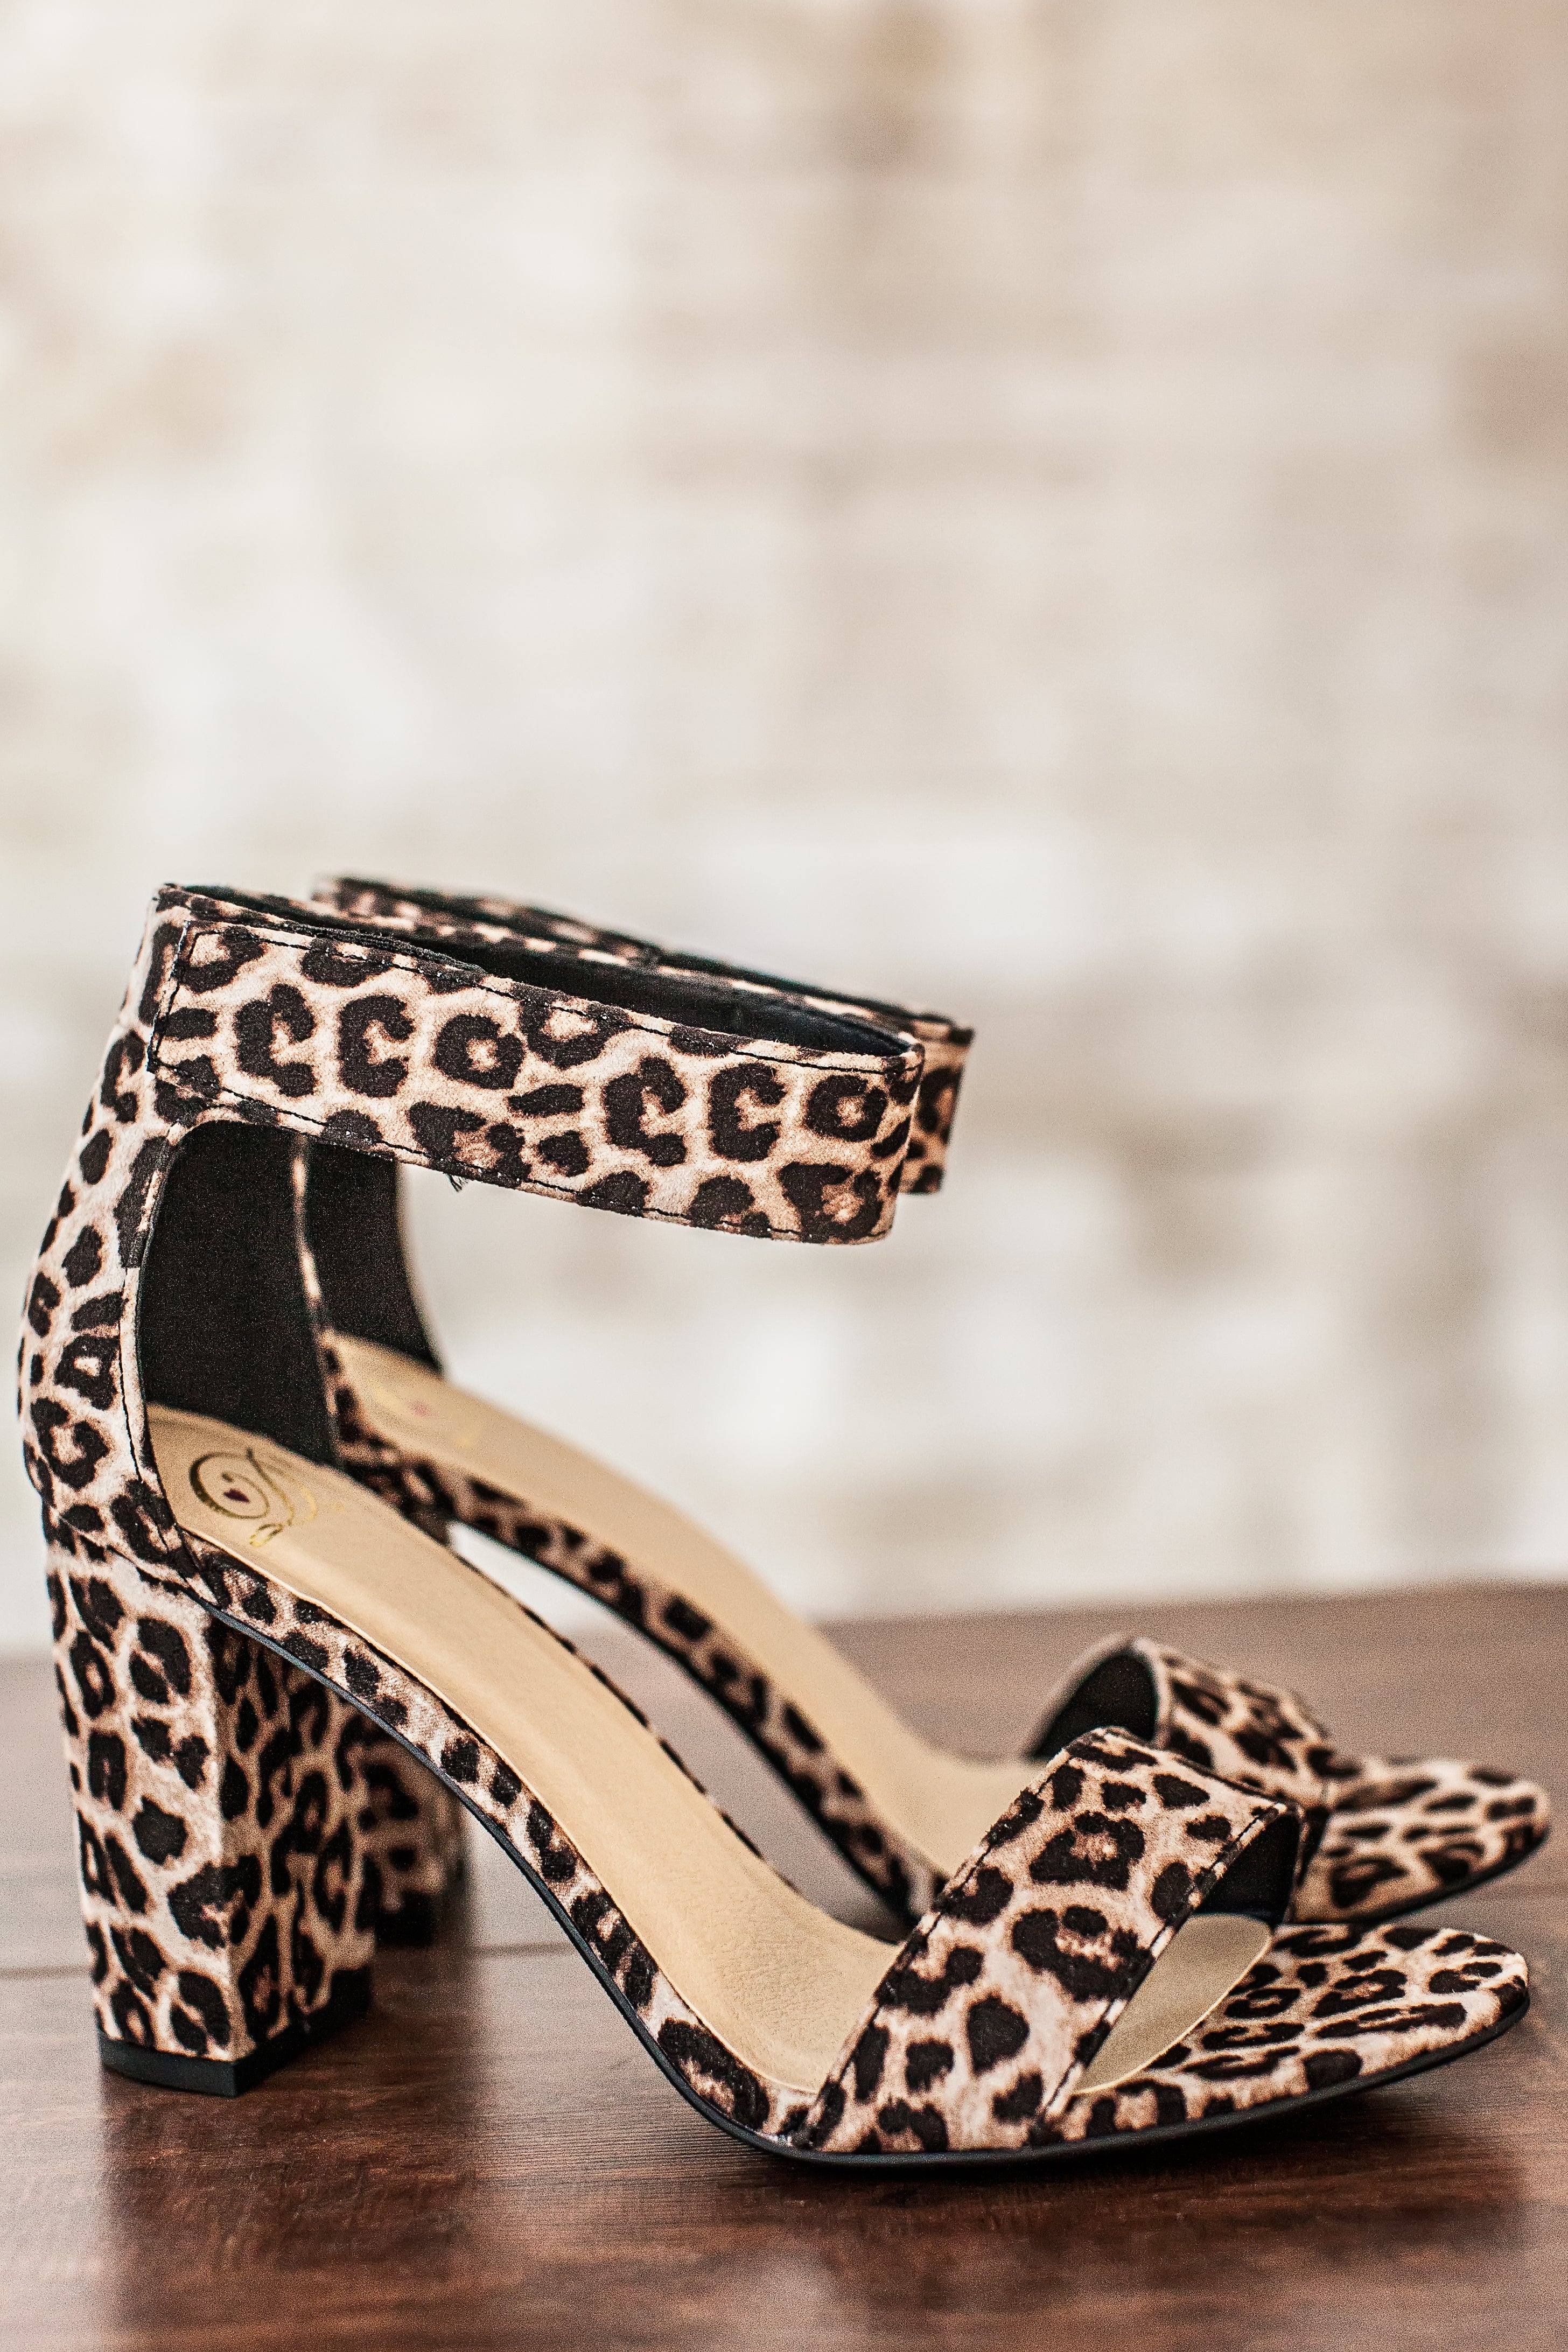 dalmation print heels